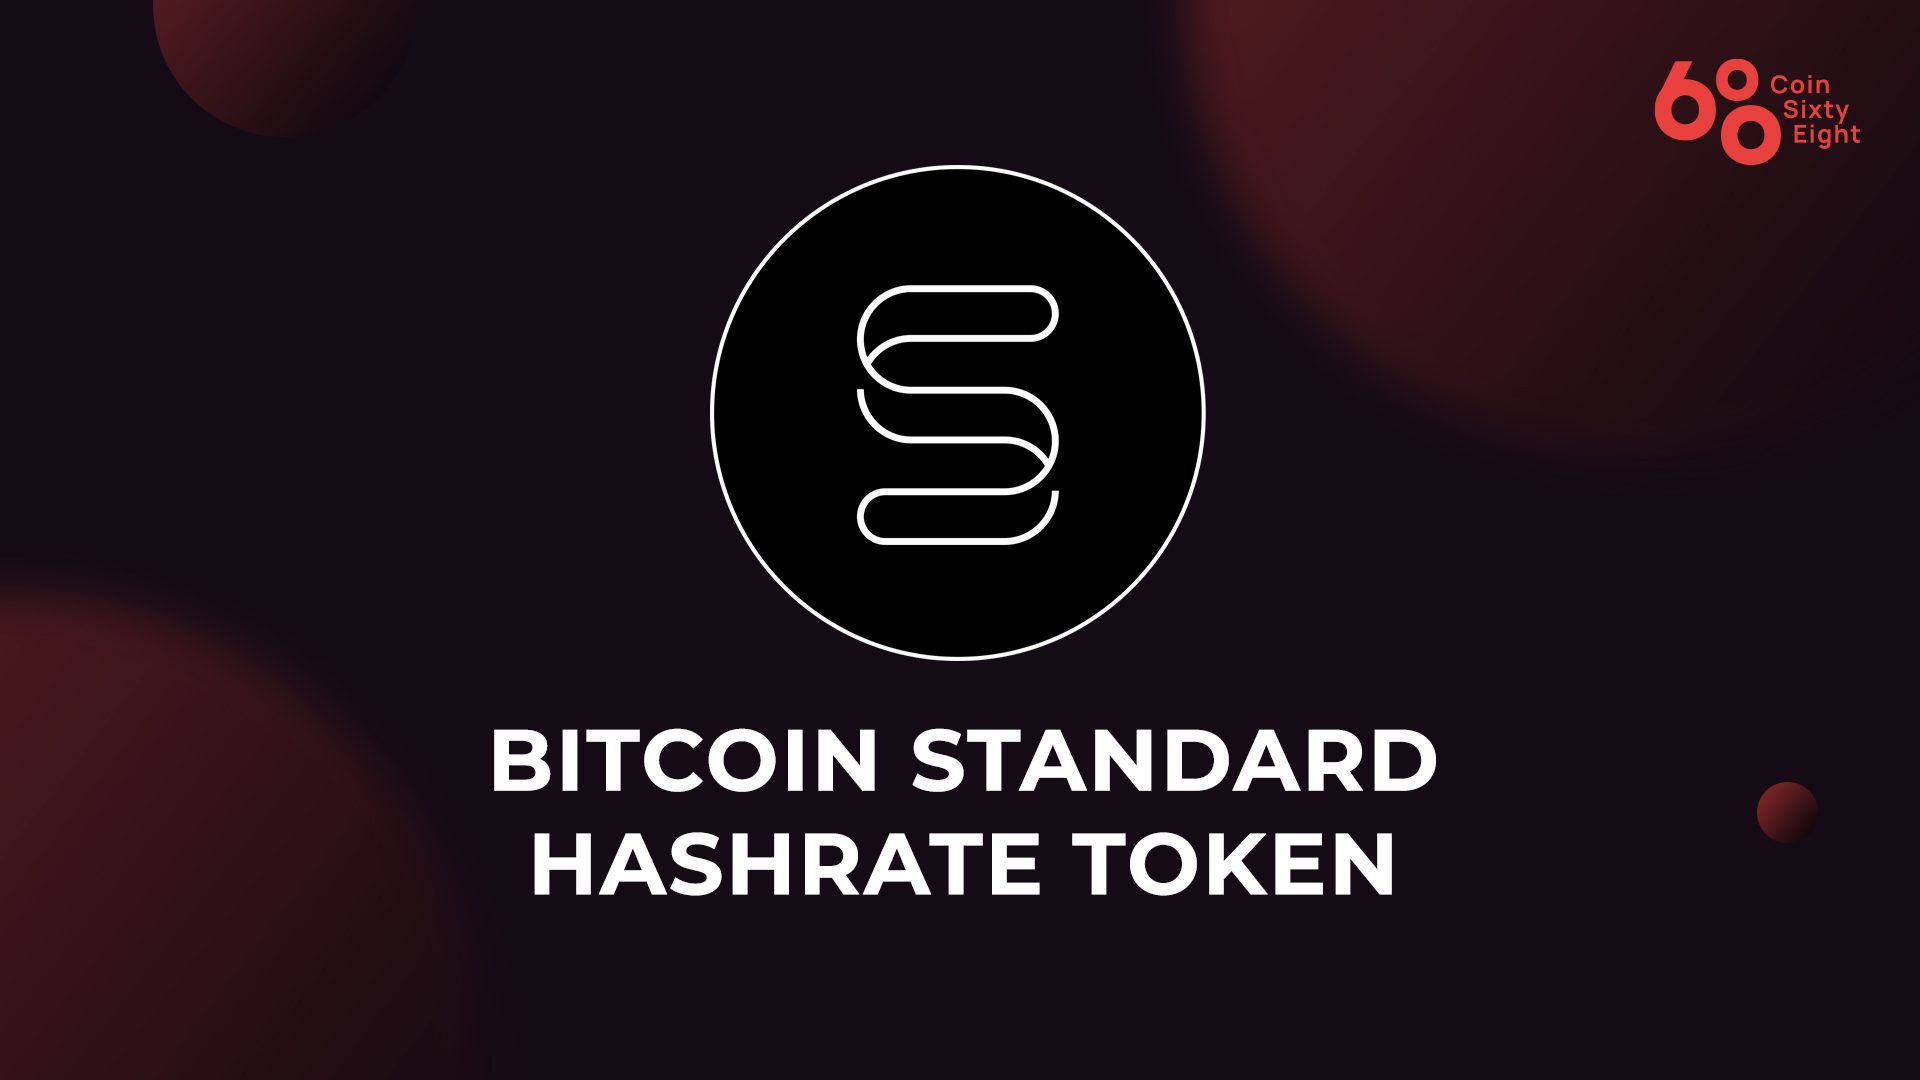 Bitcoin standard hashrate token это лучшая платформа для майнинга